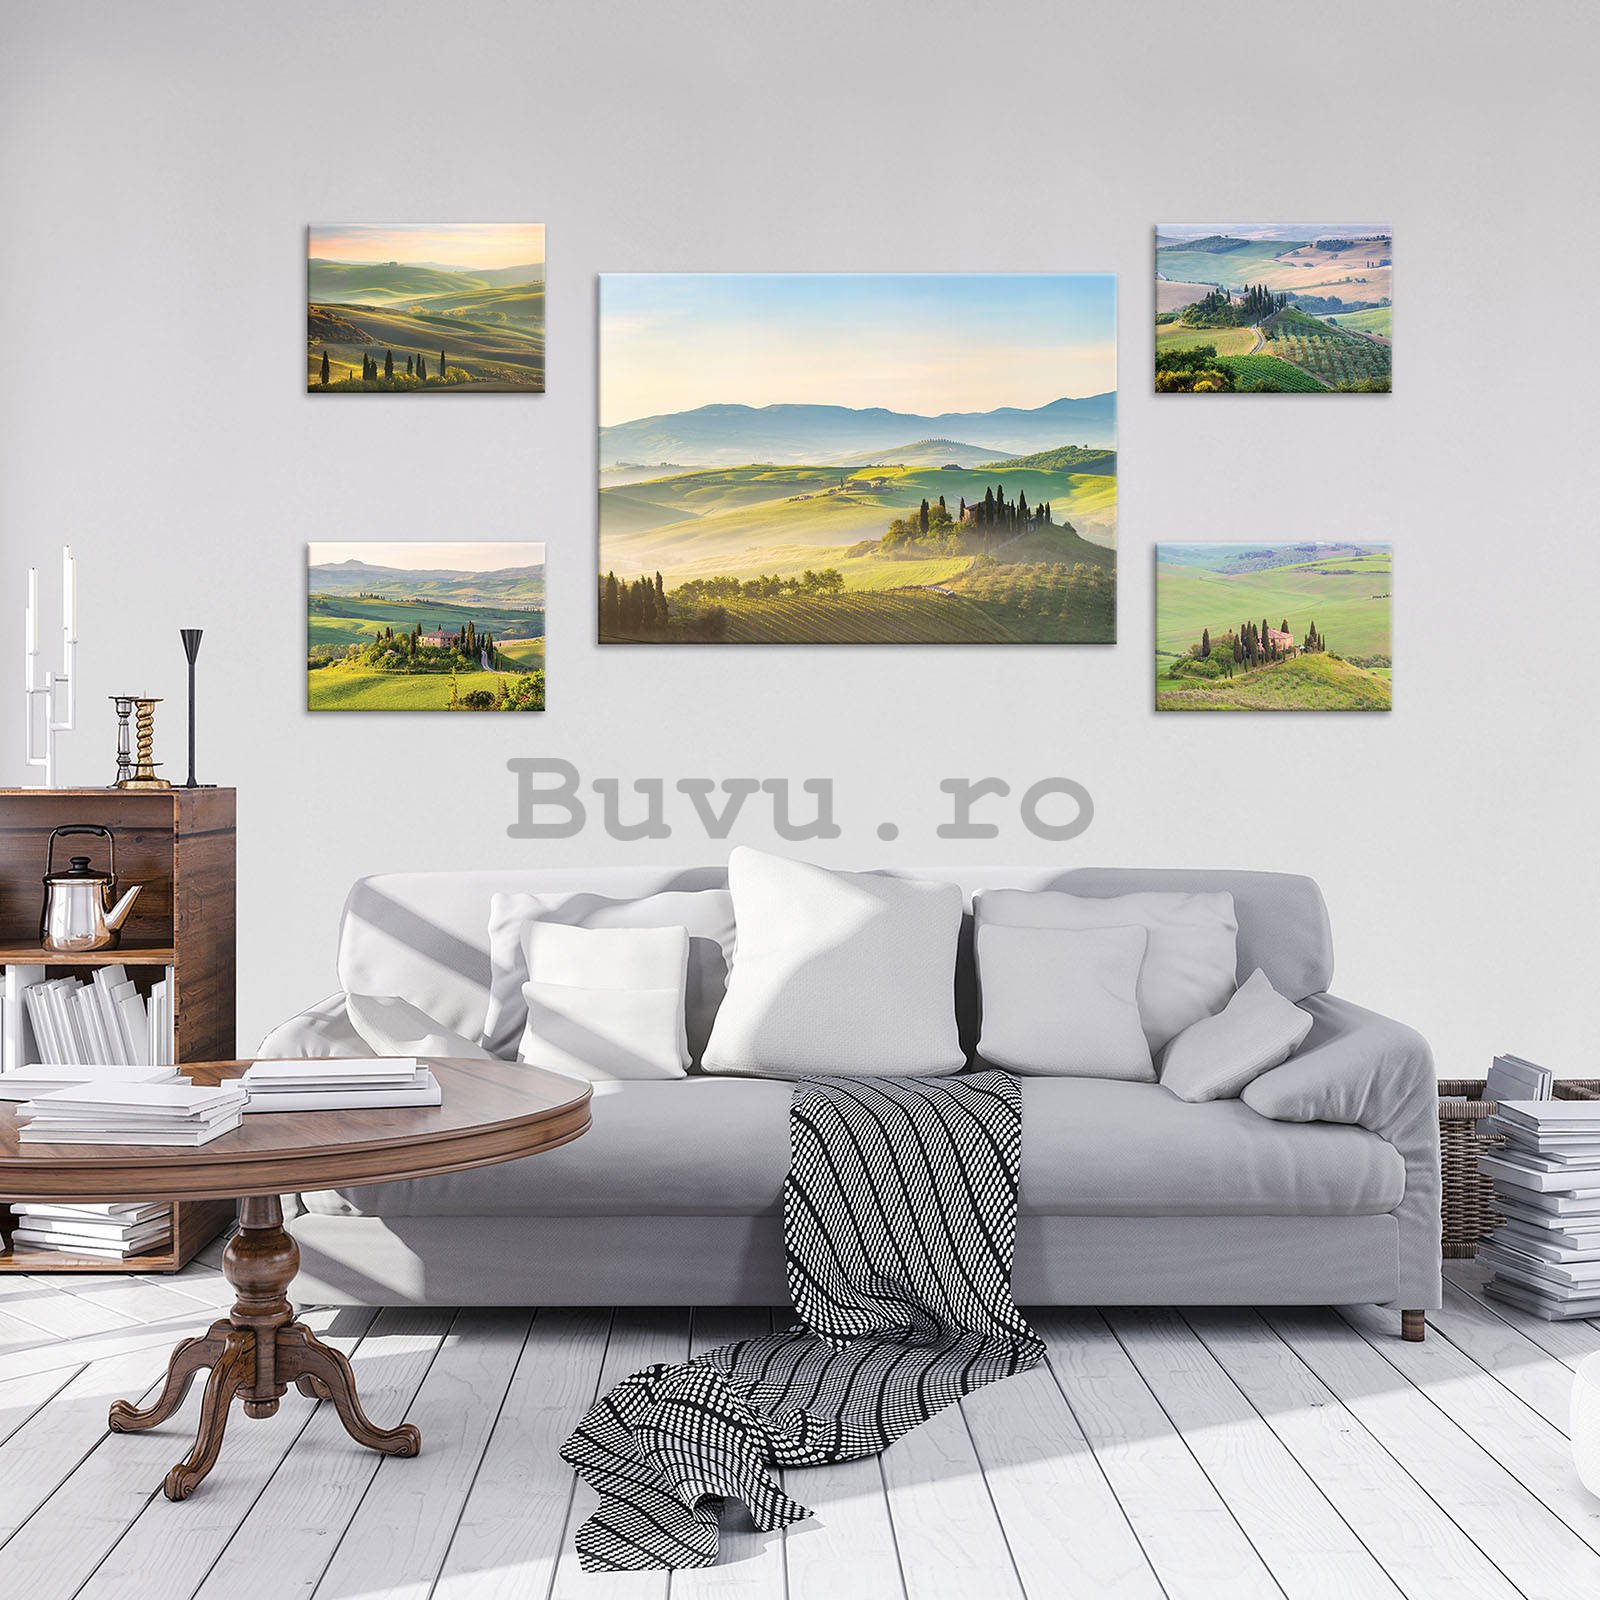 Tablou canvas: Toscana - set 1 buc 70x50 cm și 4 buc 32,4x22,8 cm